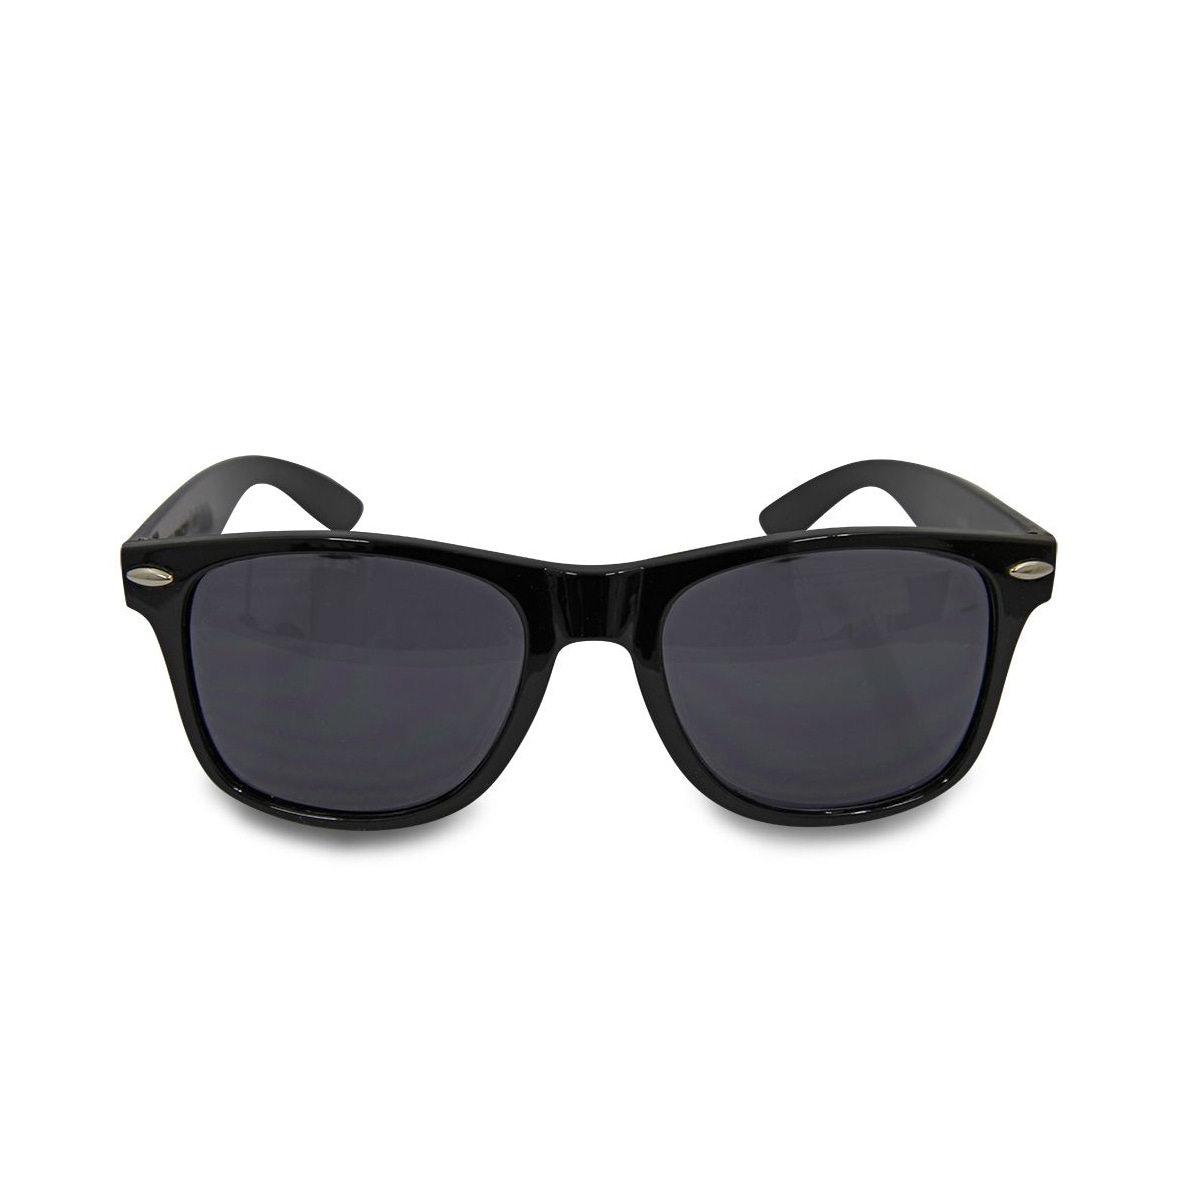 Sunglasses Malibu Rotax